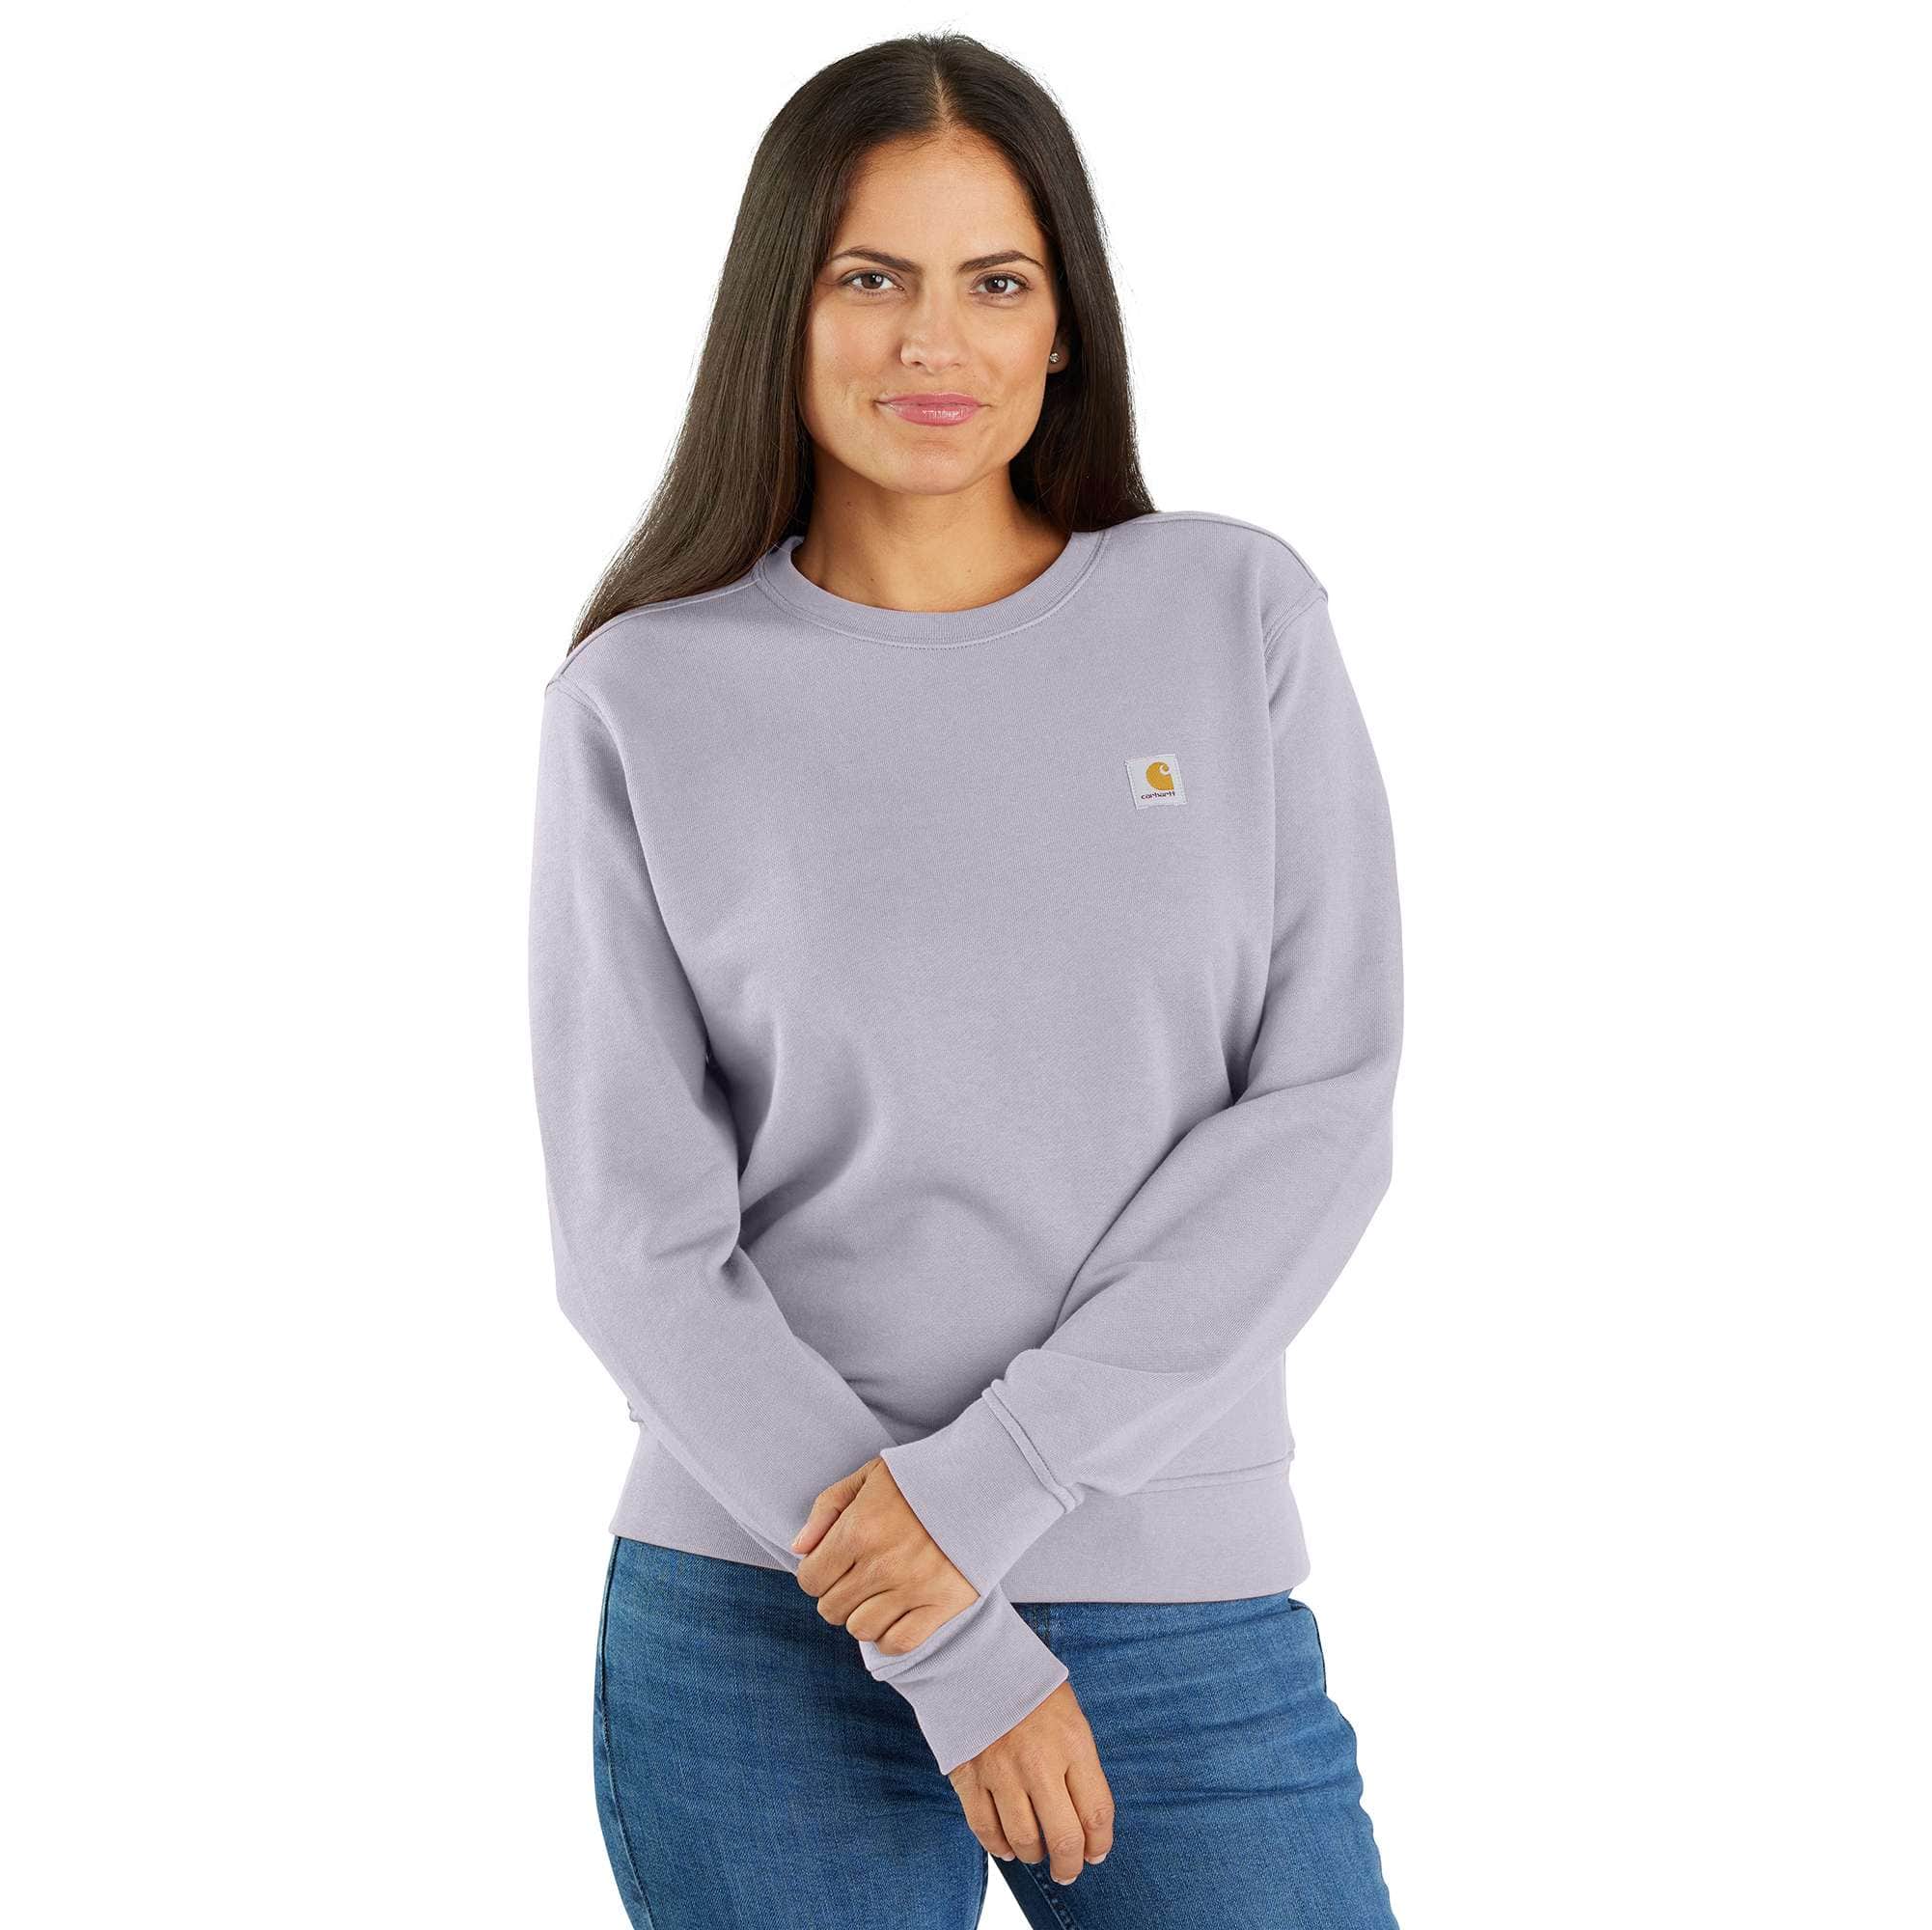 Women's Plus Size Hoodies & Sweatshirts